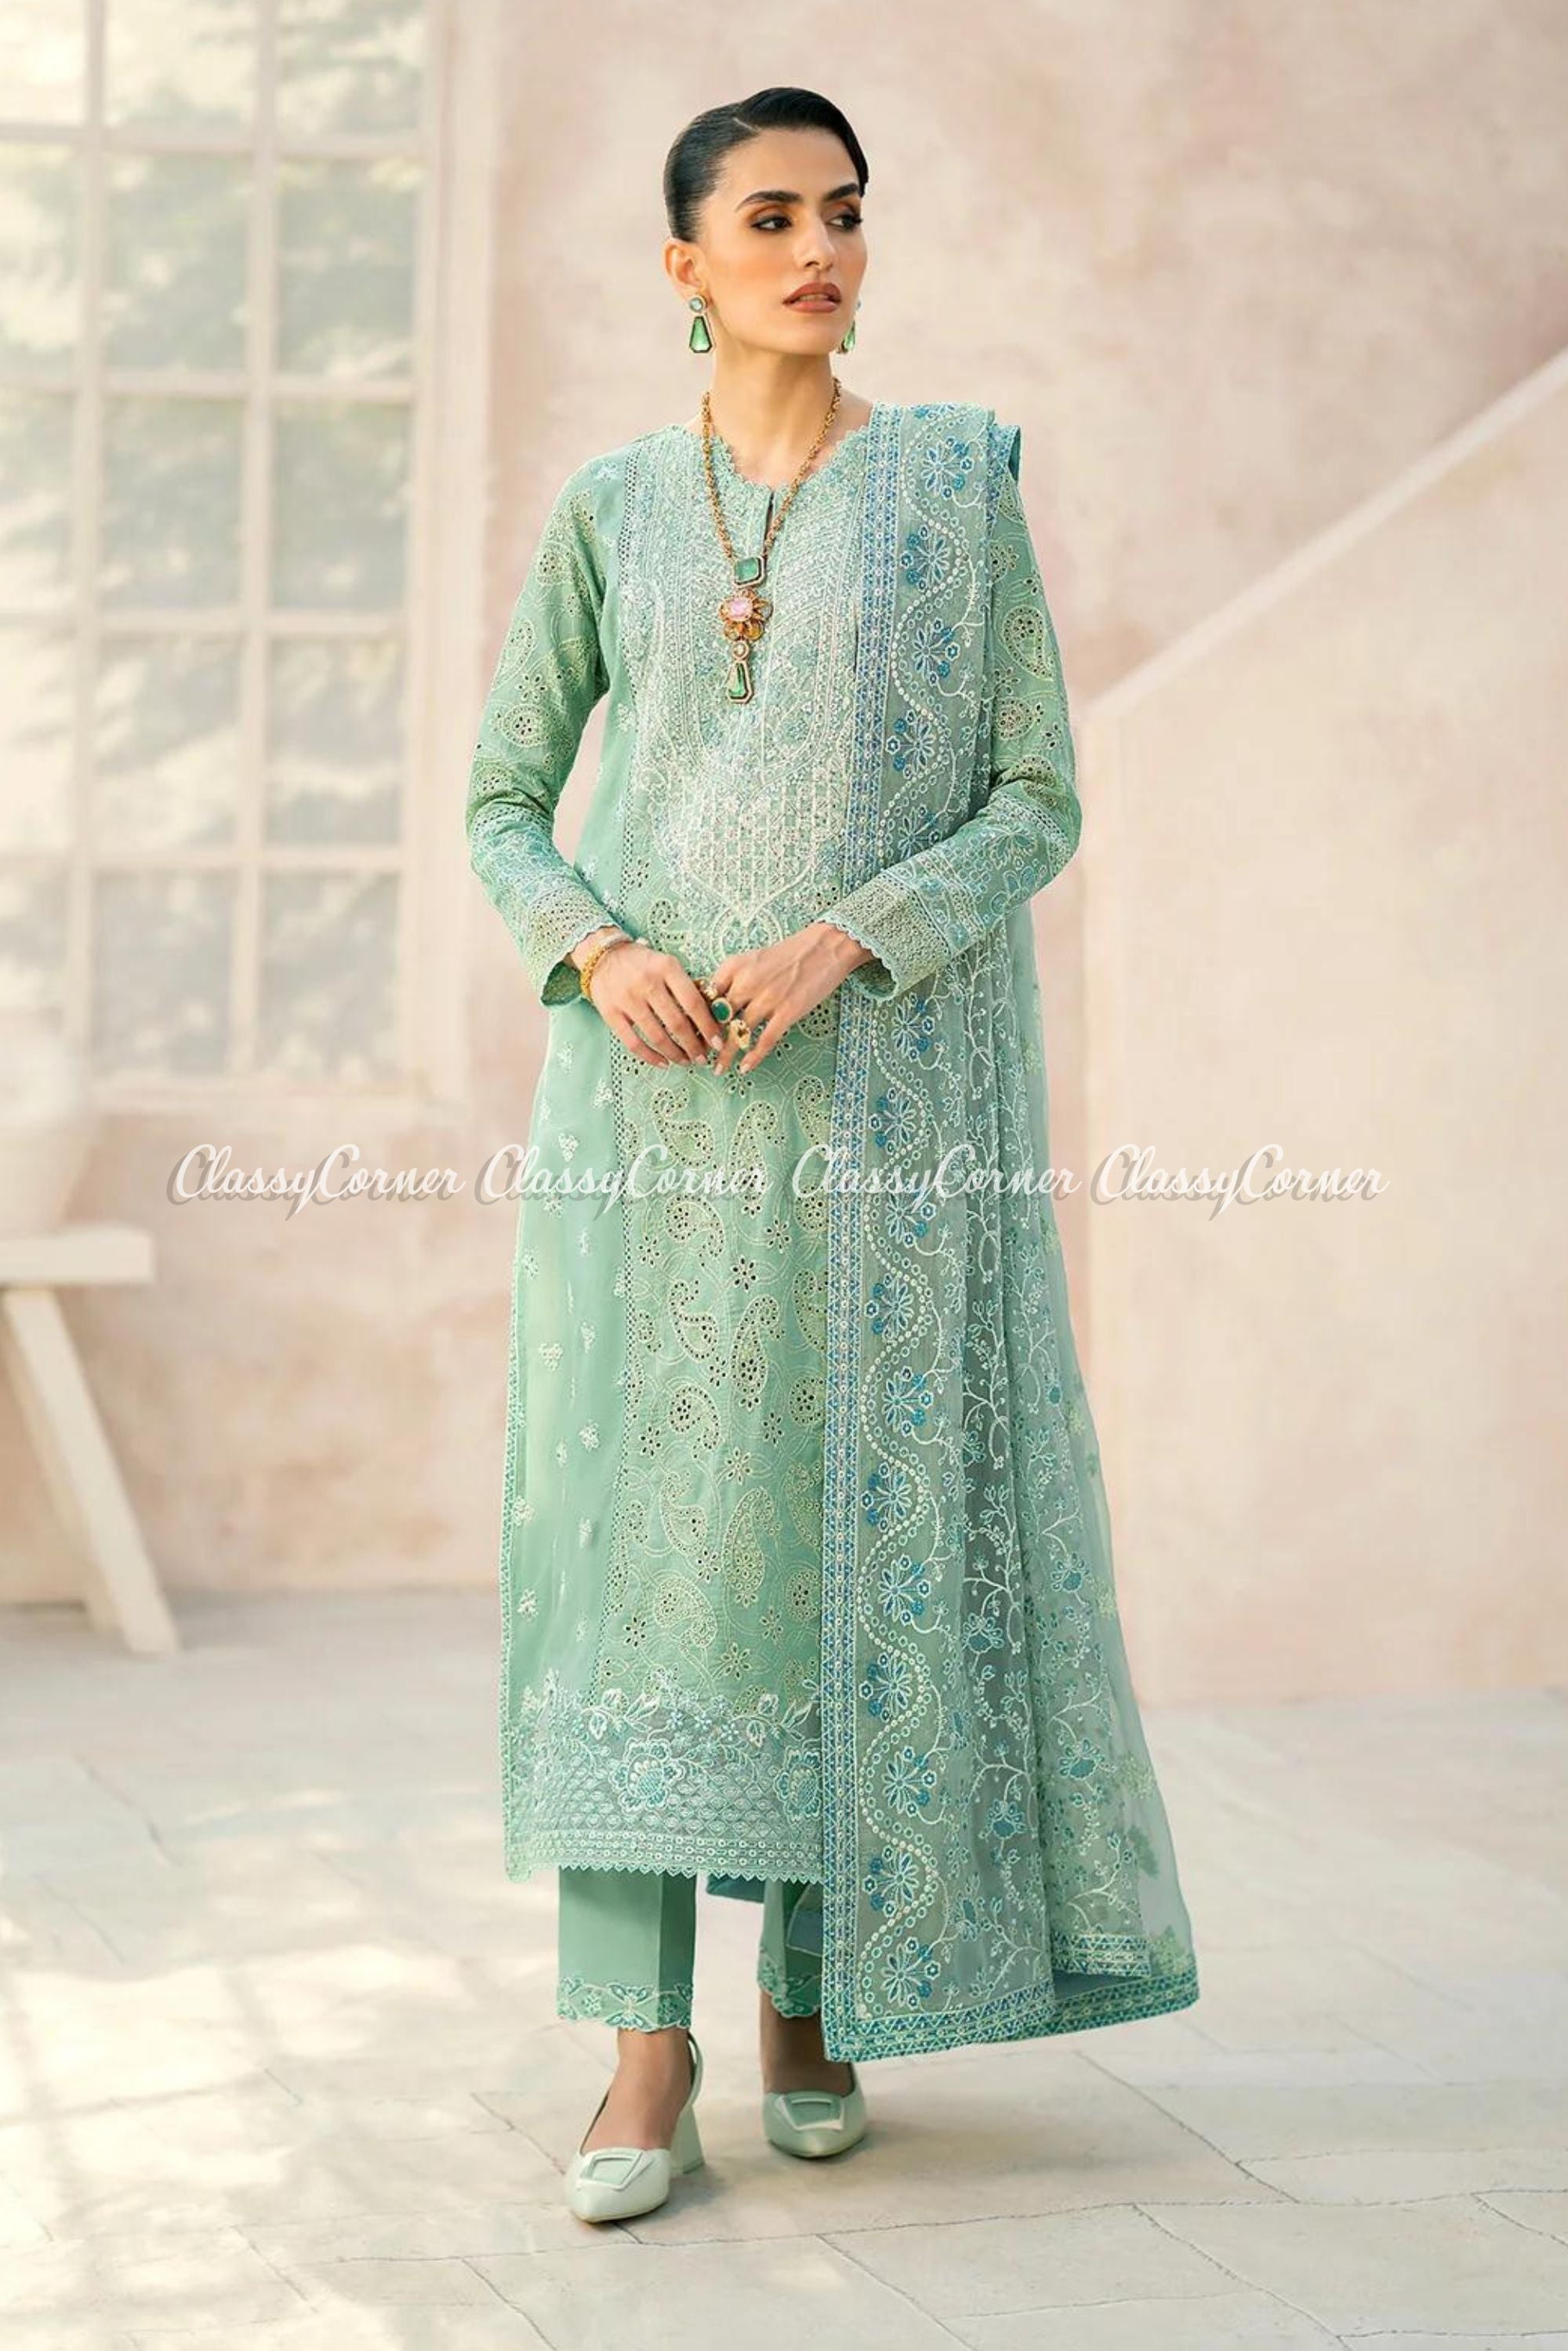 traditional pakistani formal attire